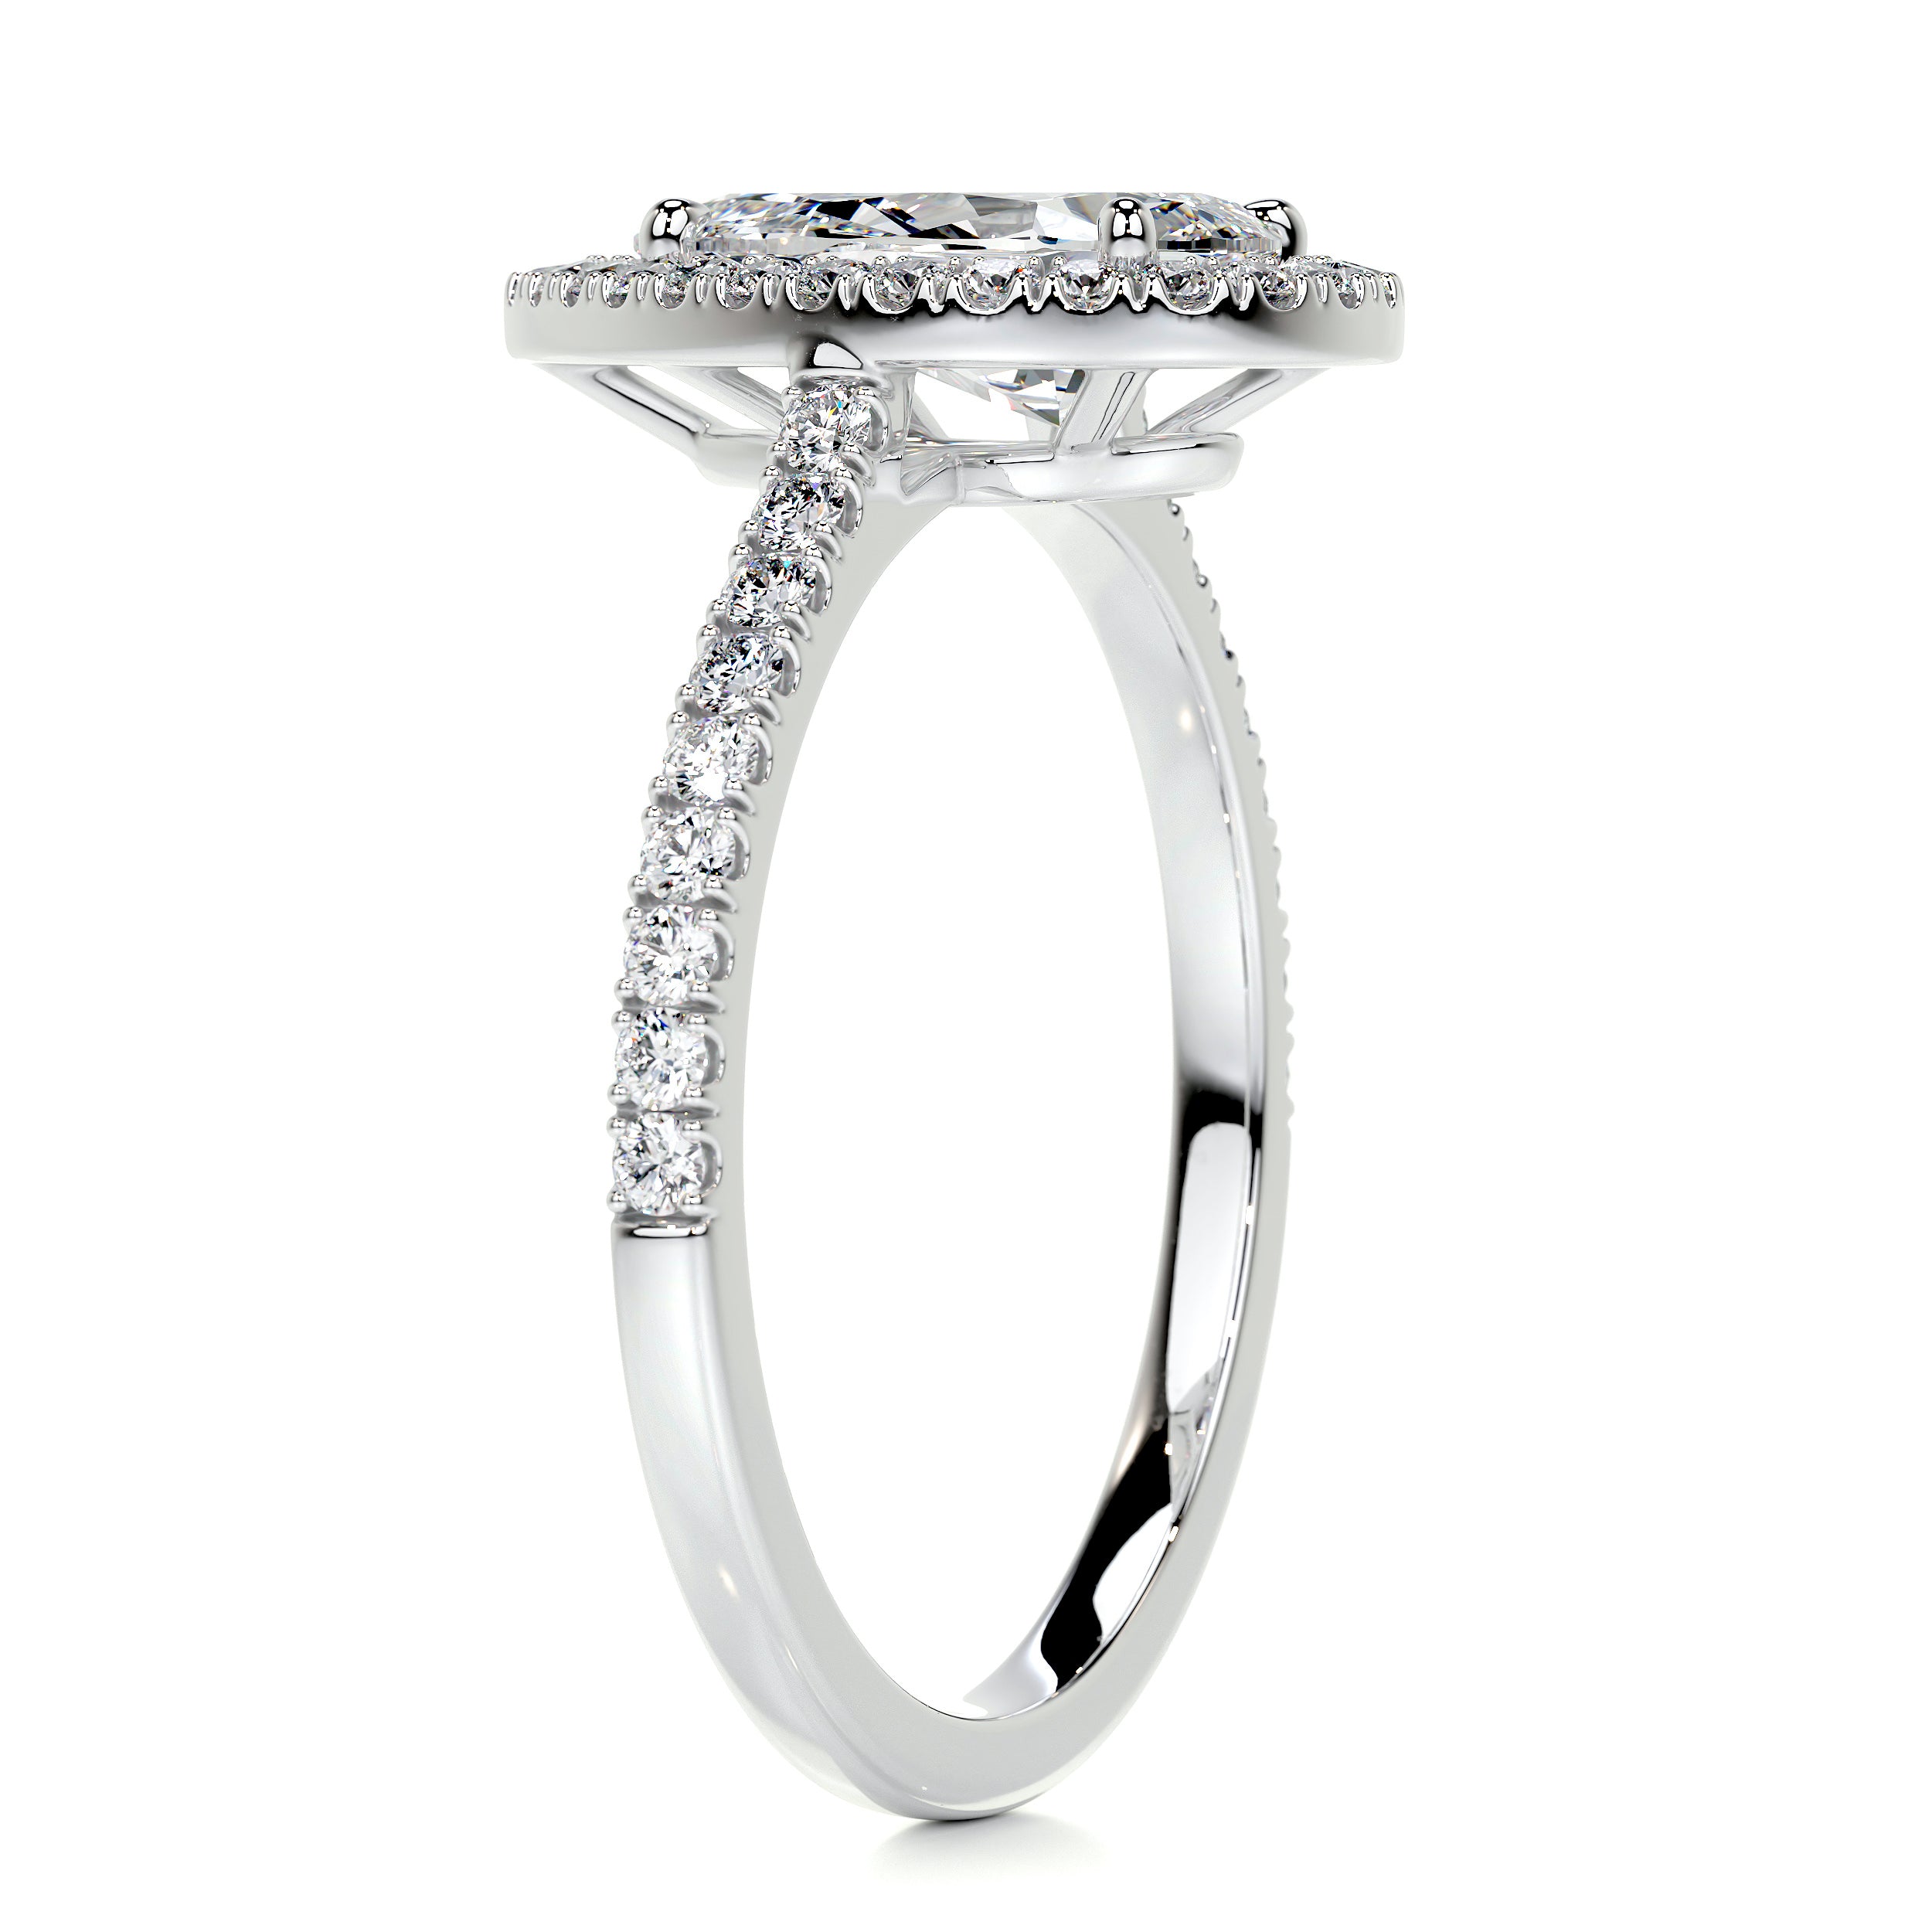 Sophia Diamond Engagement Ring   (2 Carat) -14K White Gold